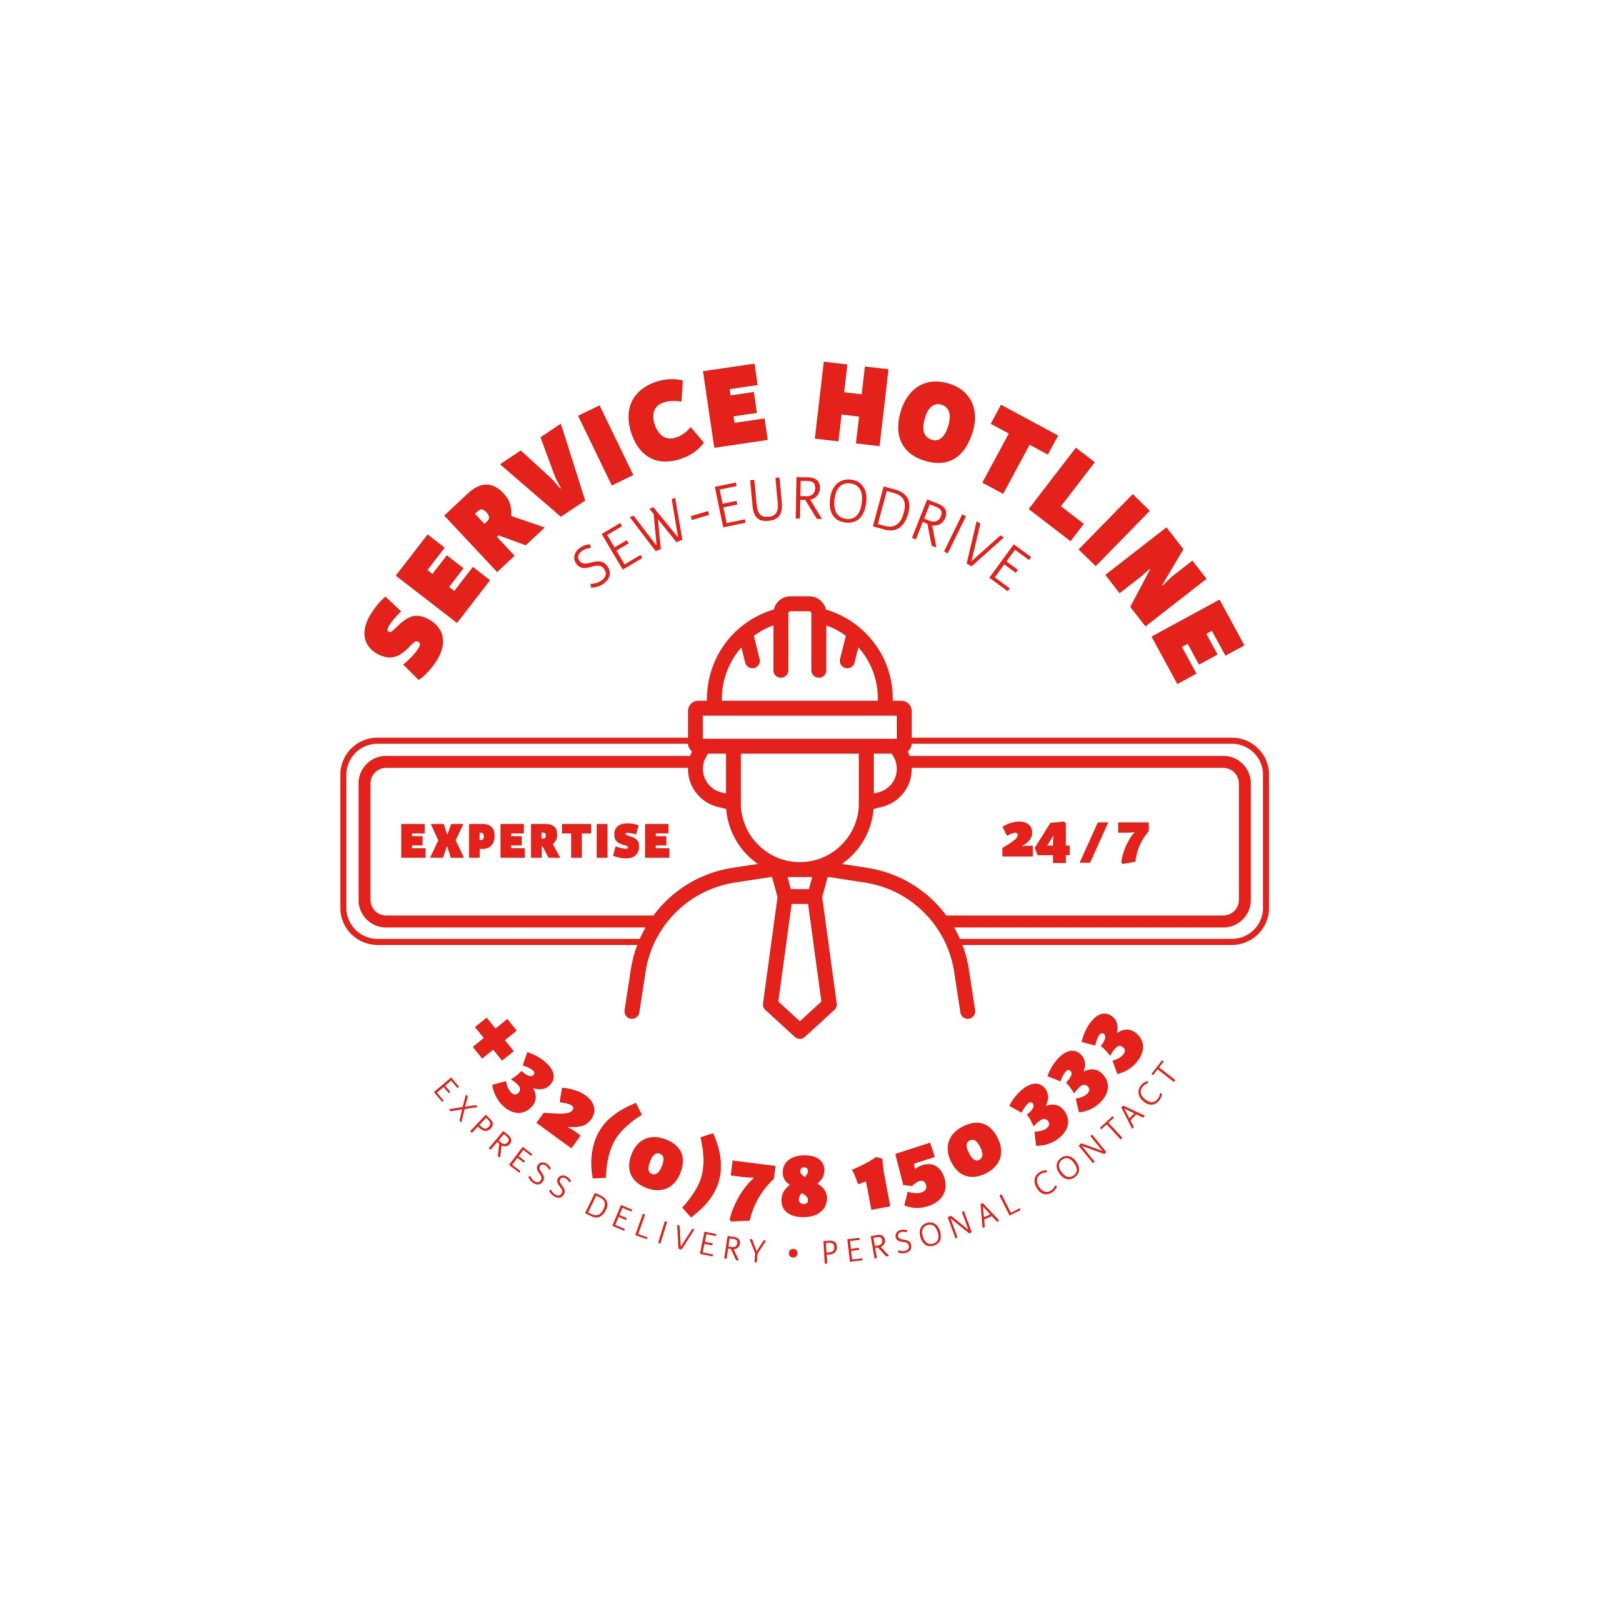 SEW-service-hotline